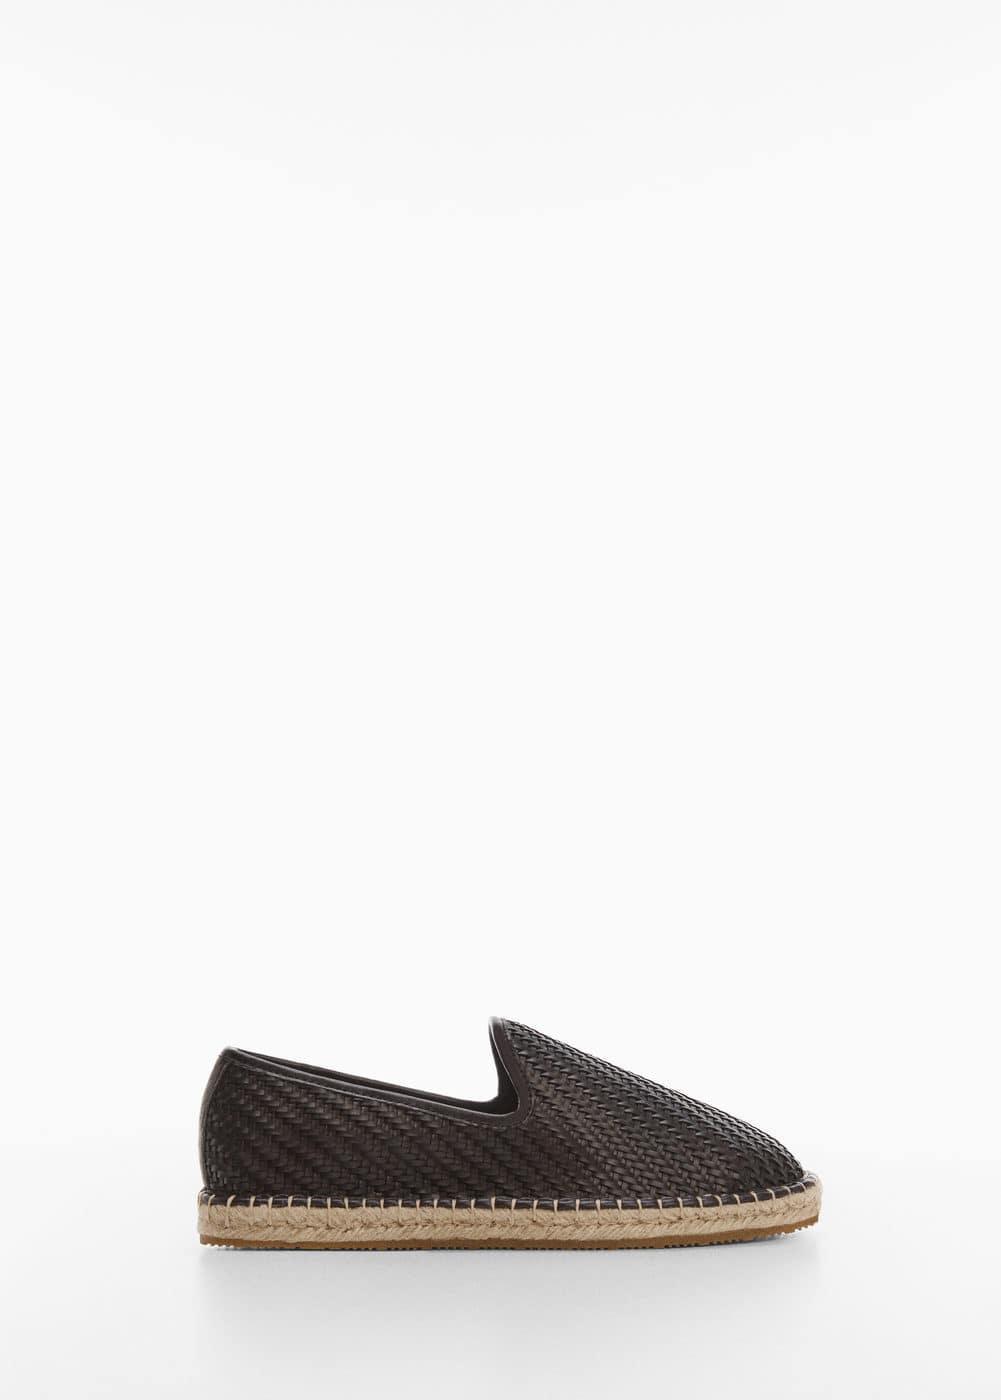 Aquatalia Qaitlin Moc Toe Slip-On Shoe Product Image